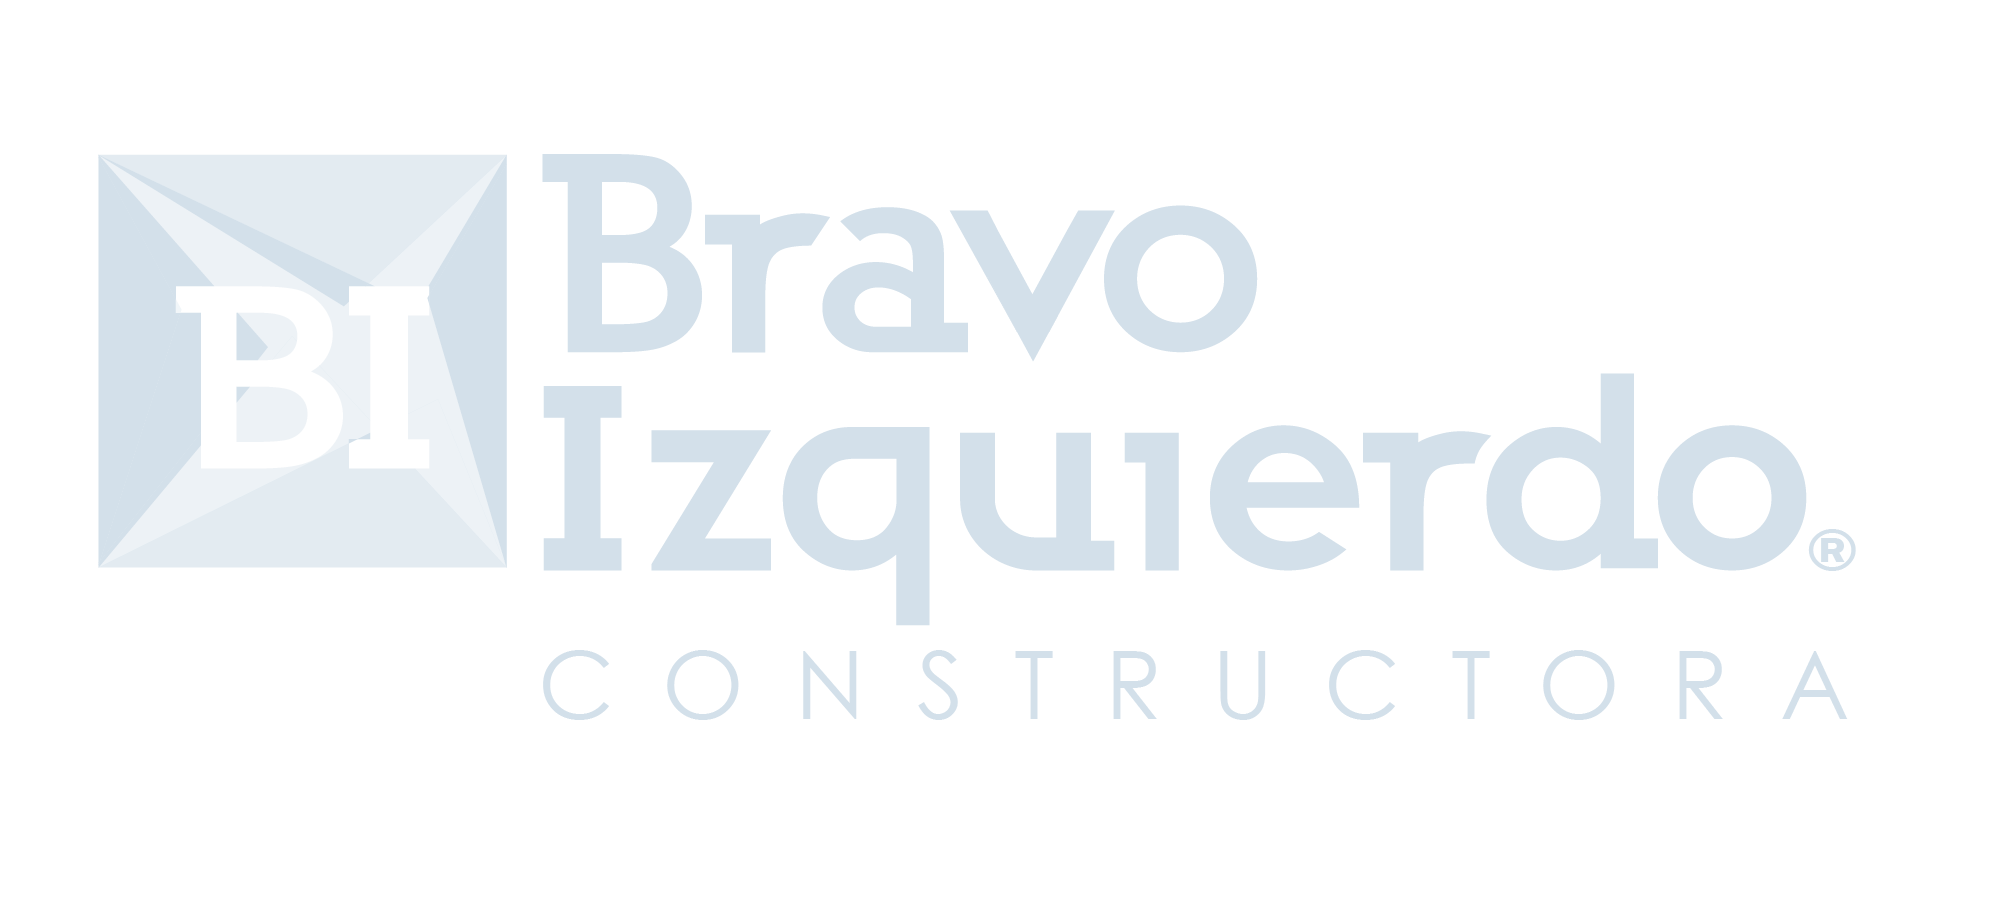 Bravo Izquierda Constructora Logotipo